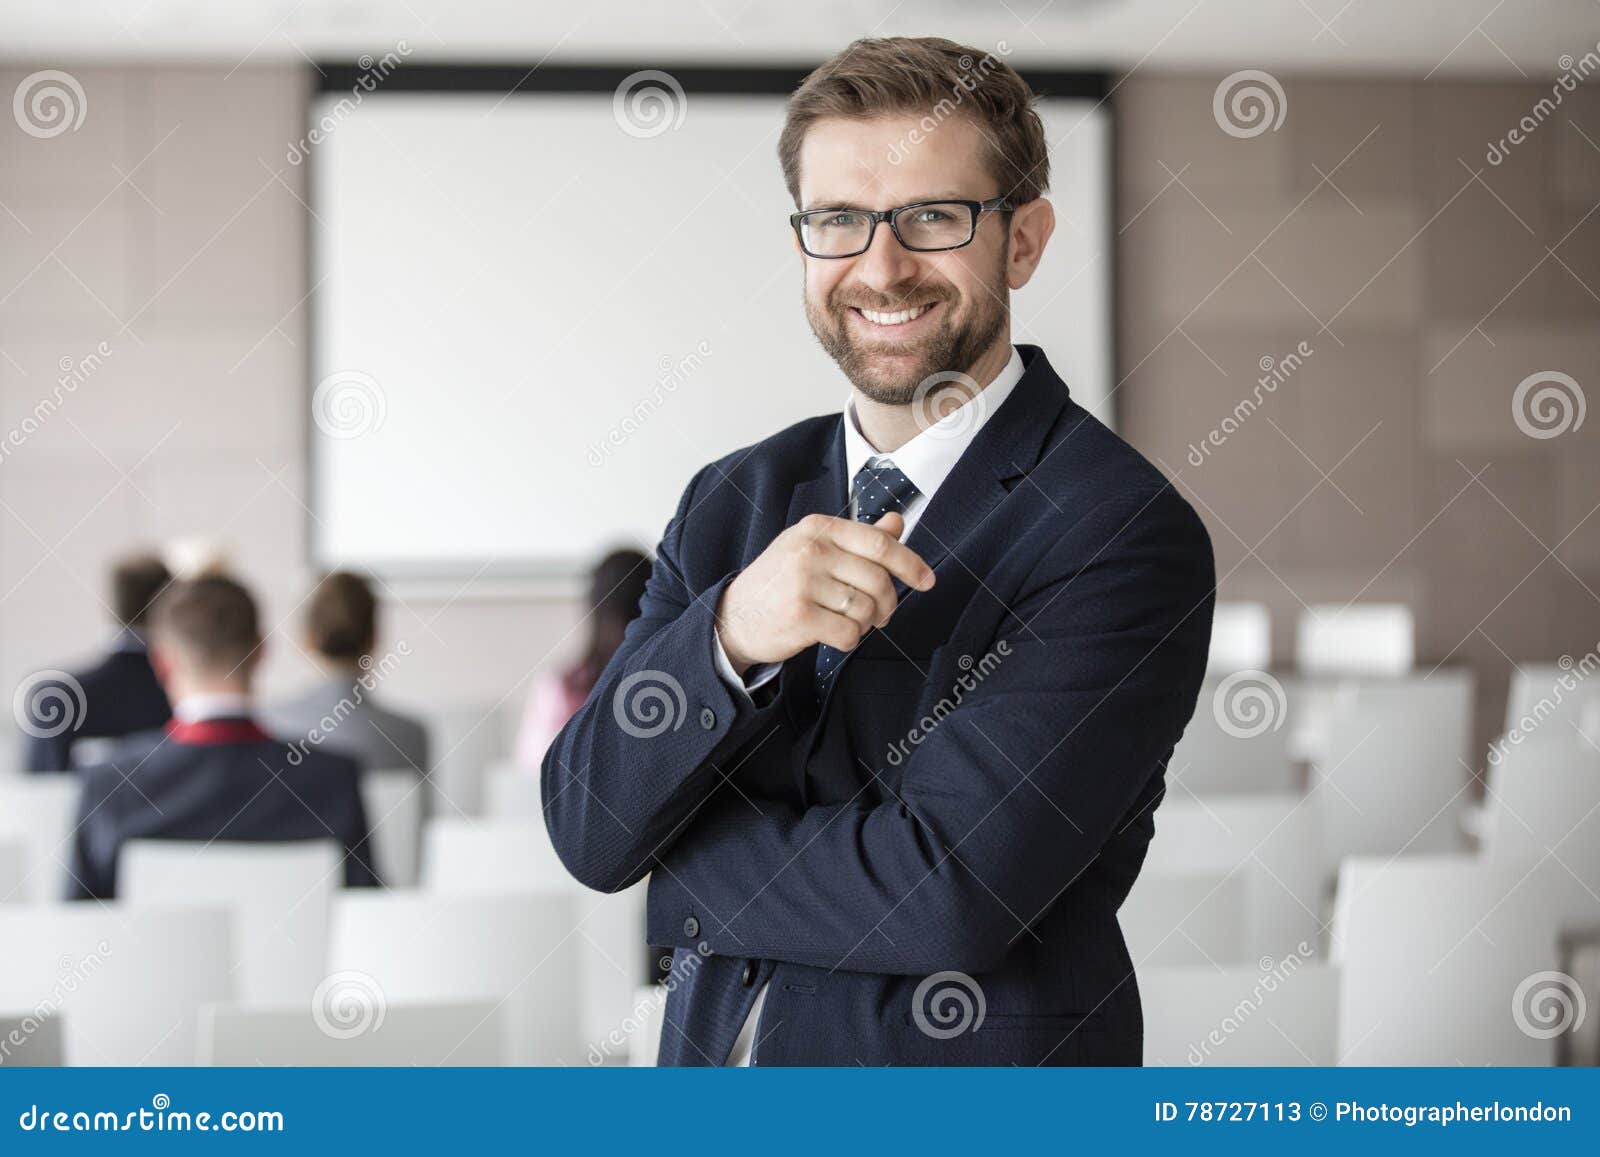 portrait of happy businessman standing in seminar hall